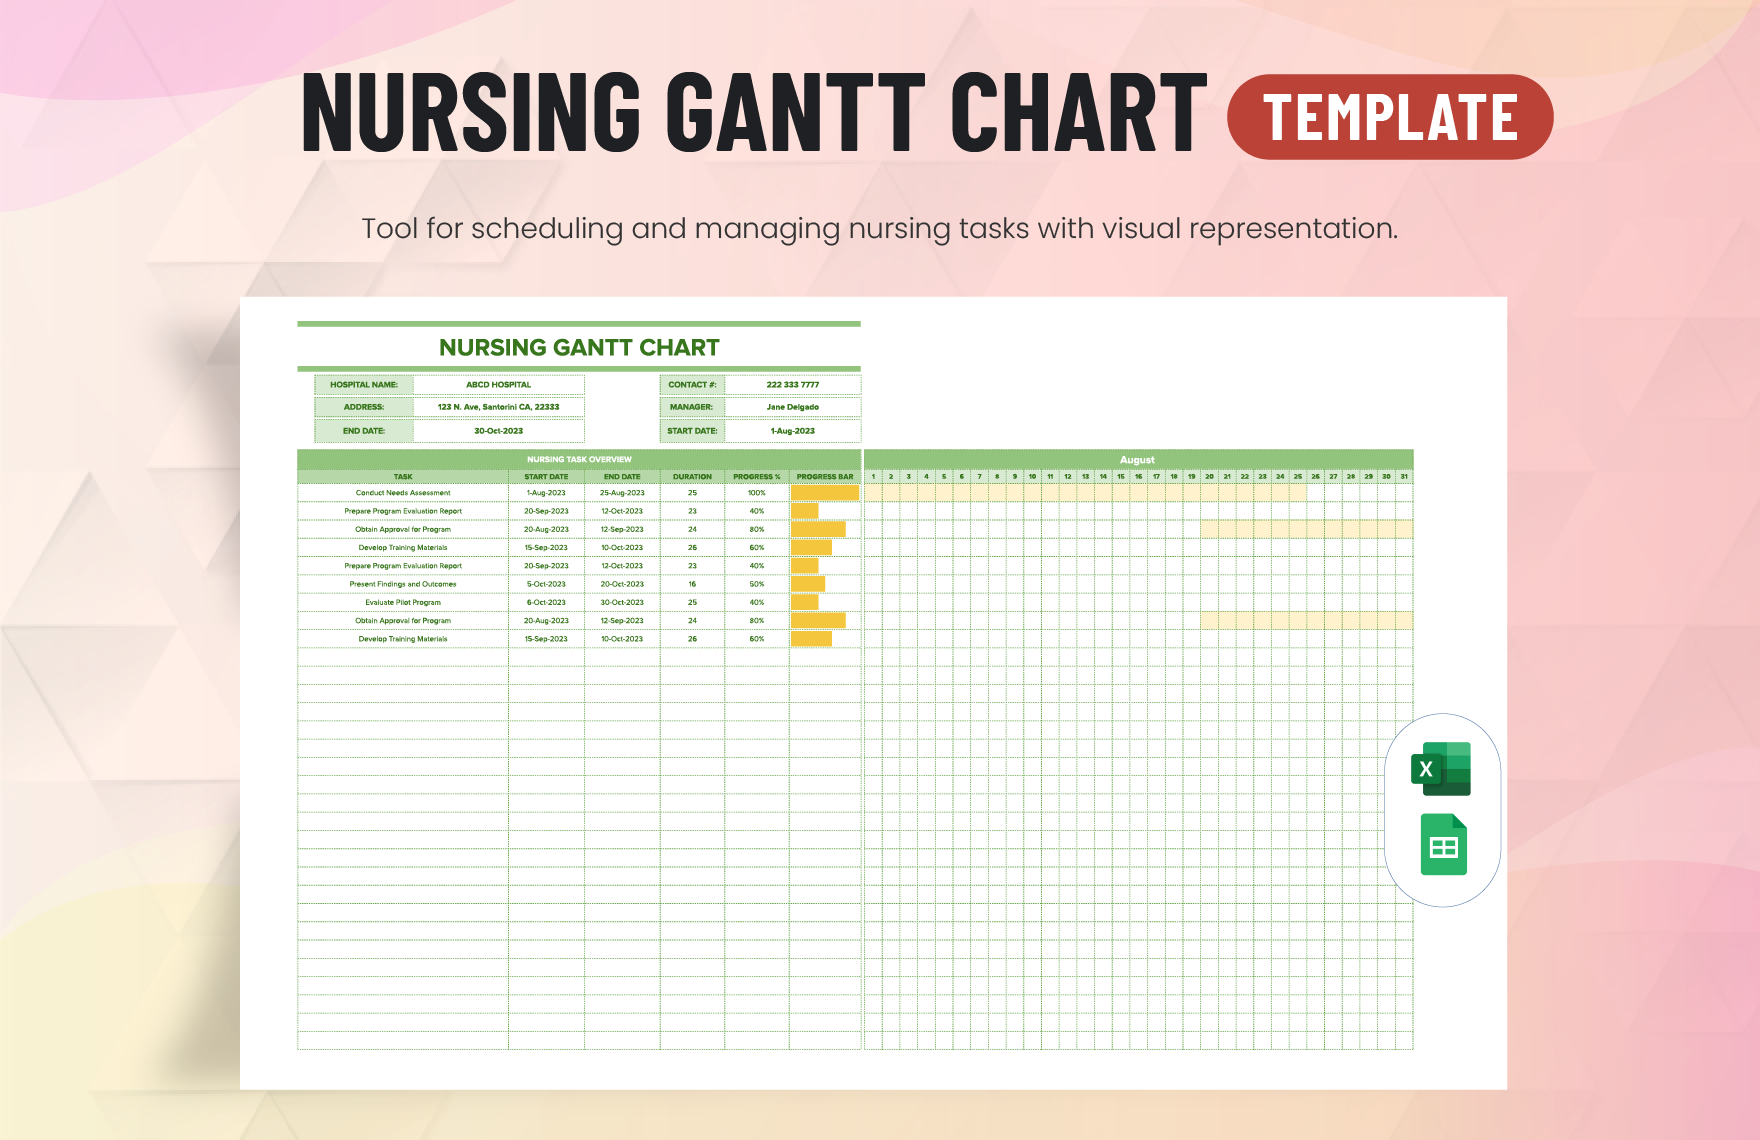 Nursing Gantt Chart Template in Excel, Google Sheets